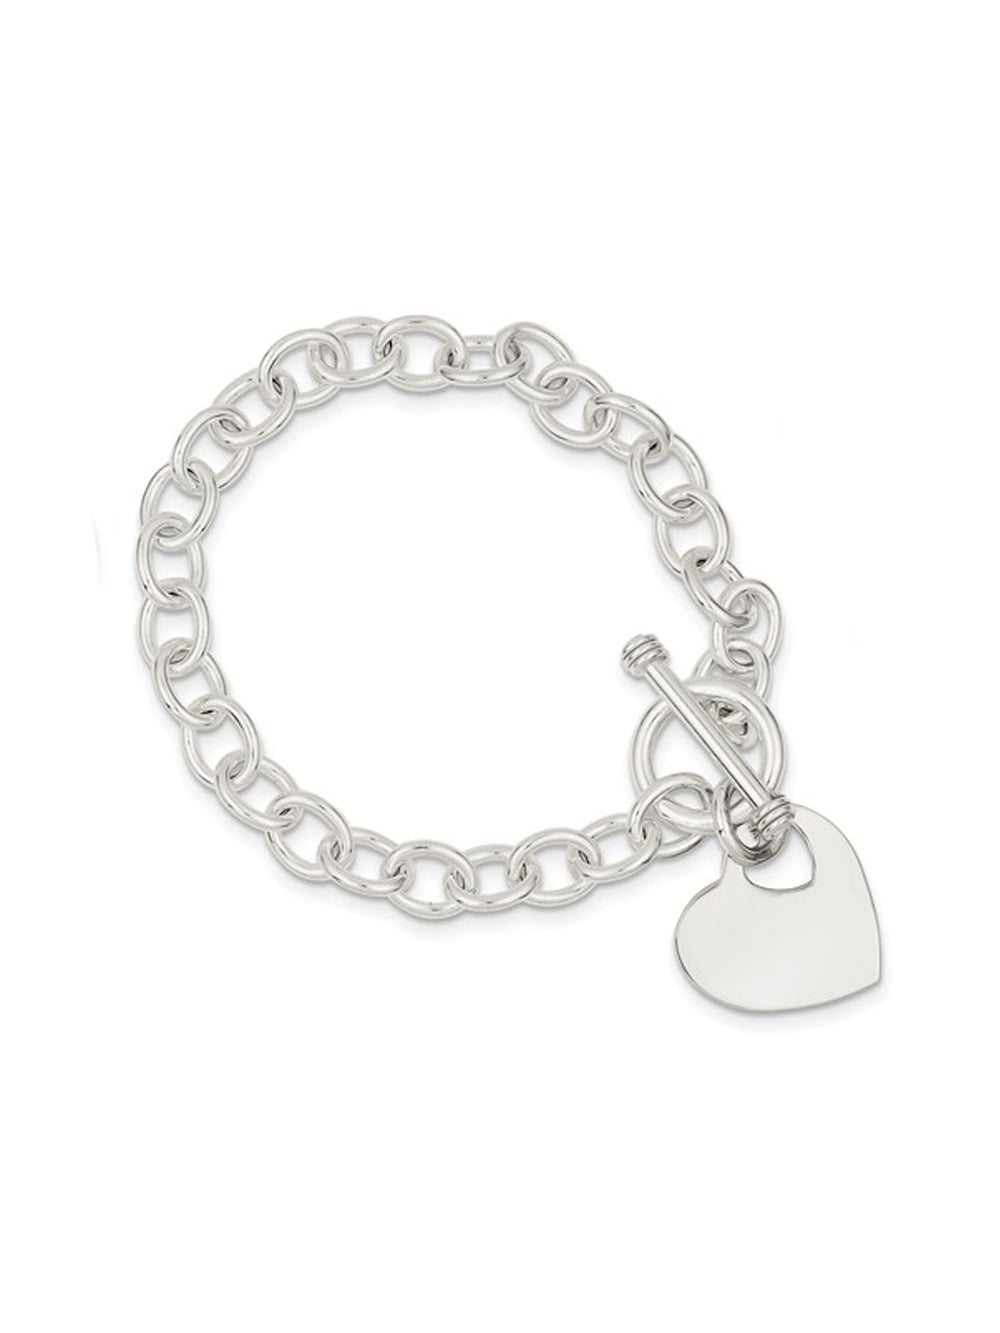 Hidden Hollow Beads Charm Bracelet, Starter, Stainless Steel Chain